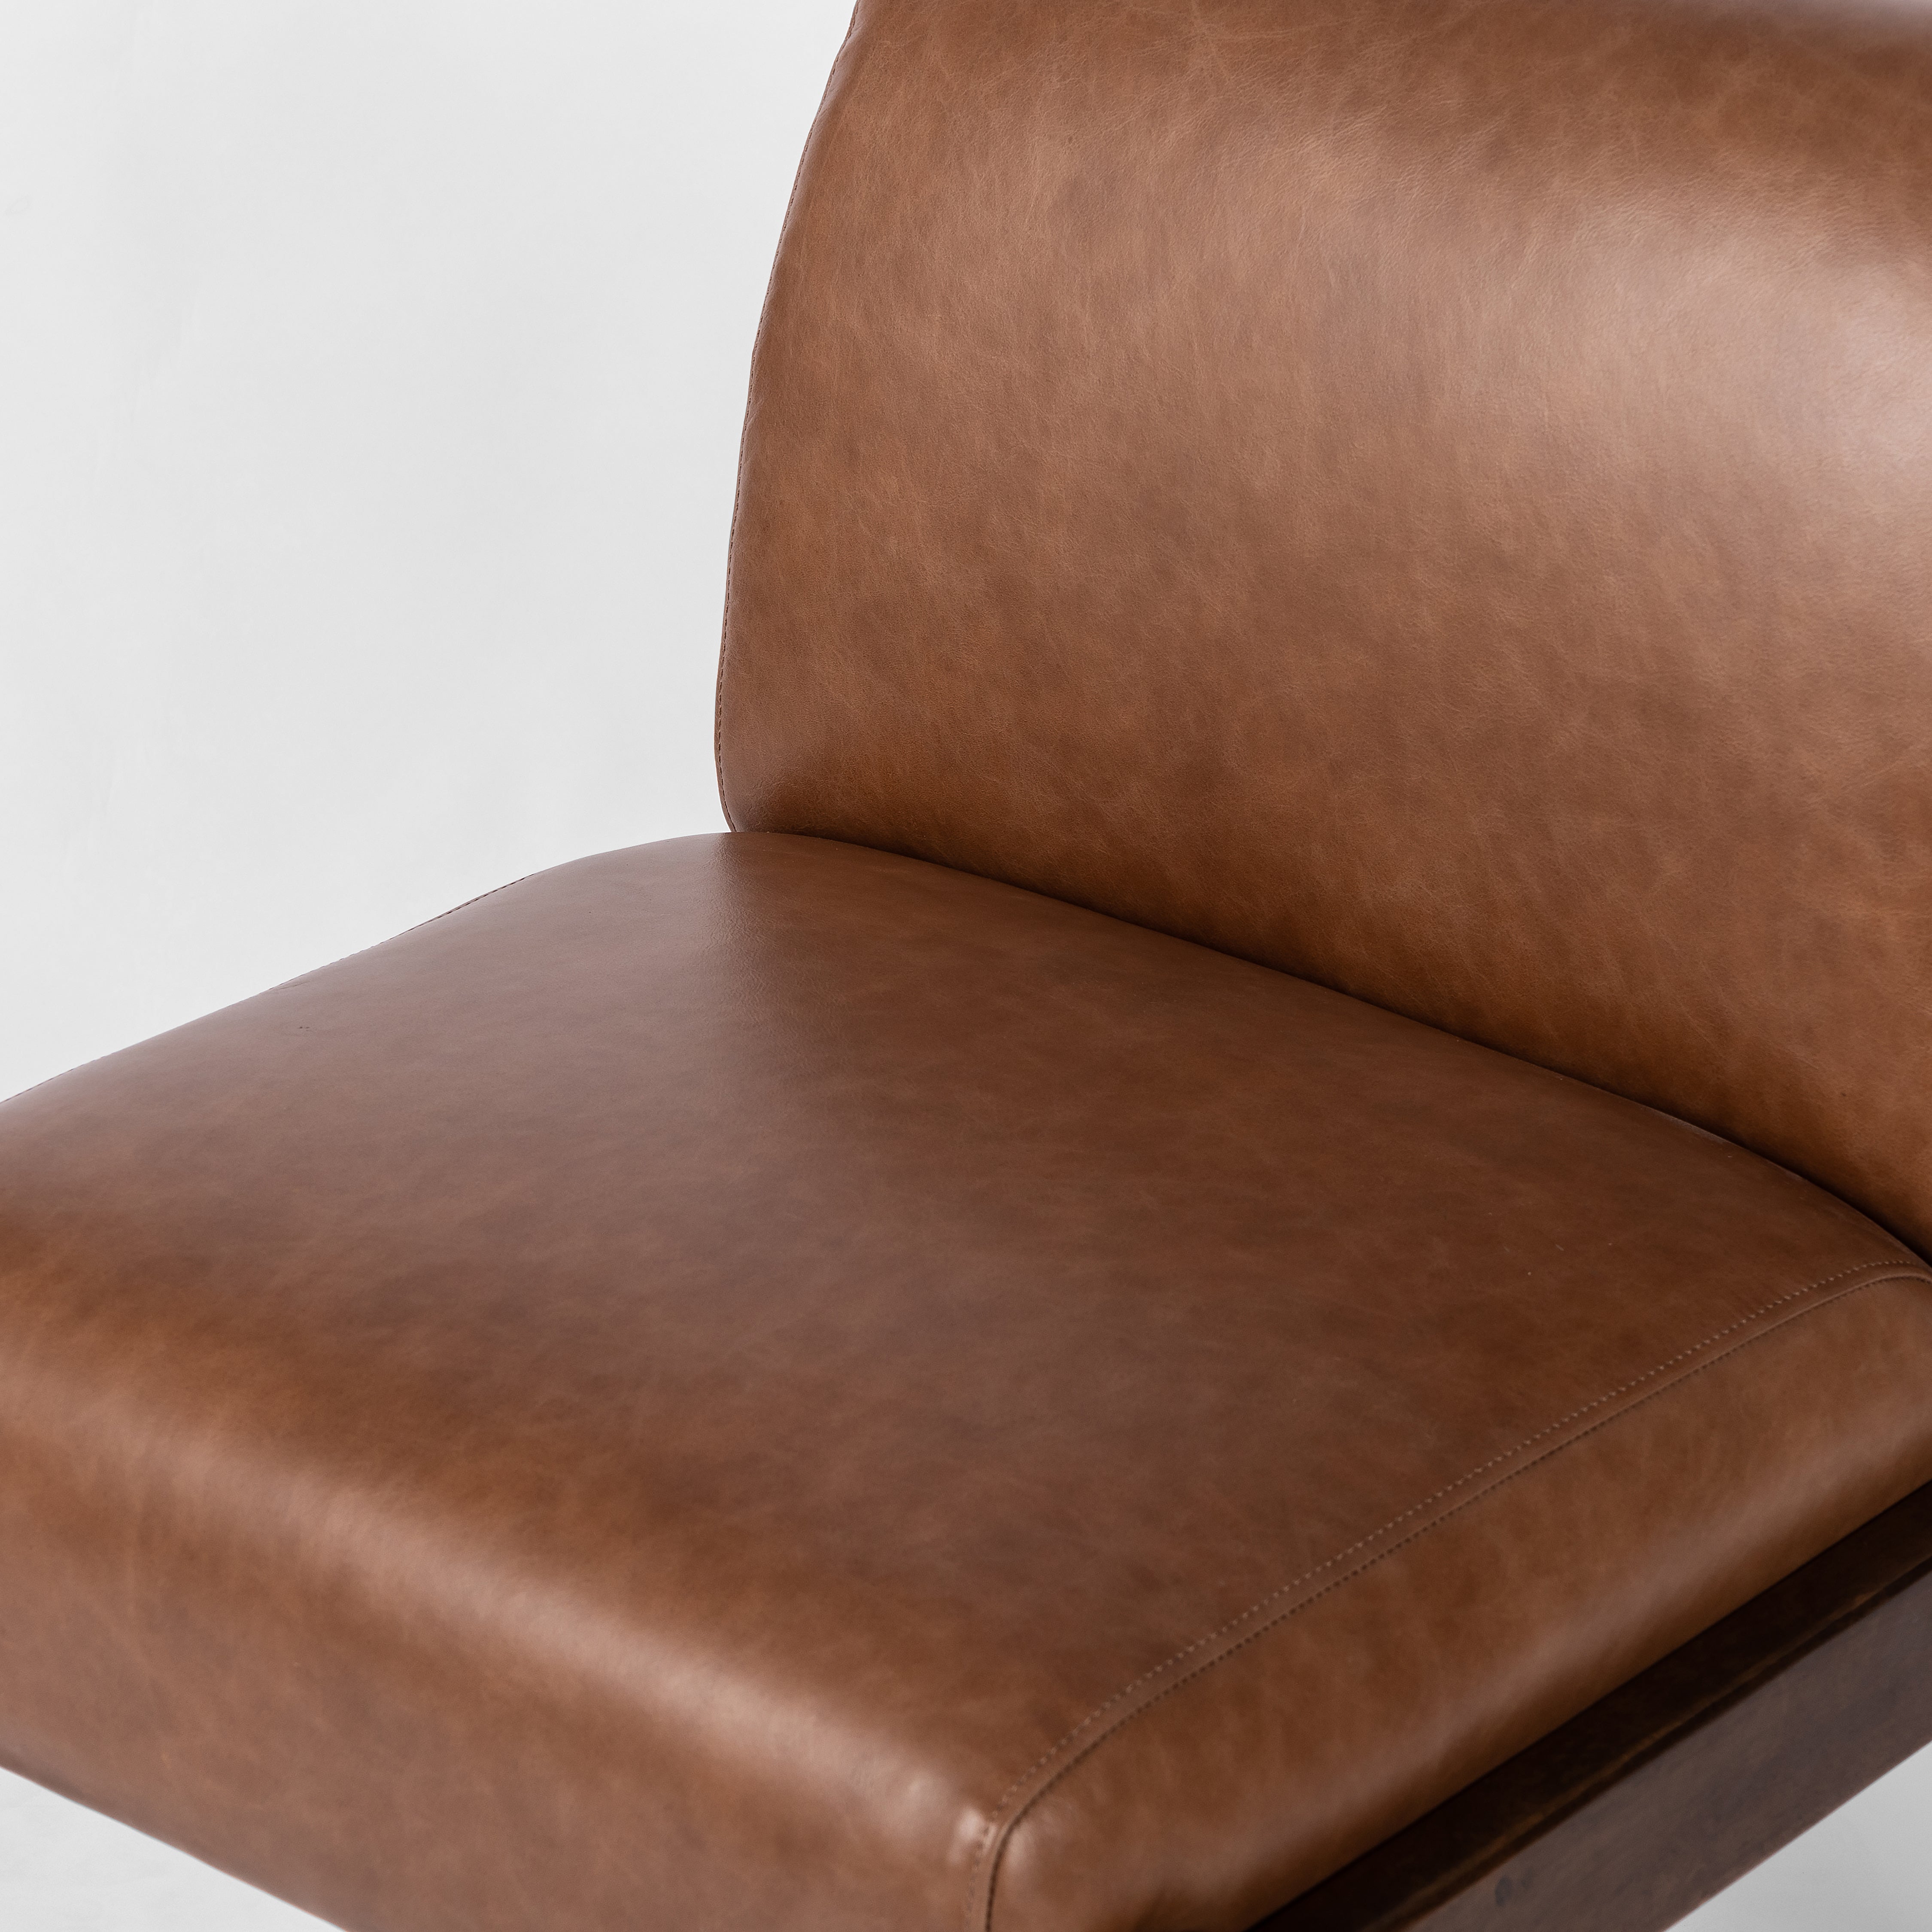 Redmond Dining Chair-Sonoma Chestnut - StyleMeGHD - 